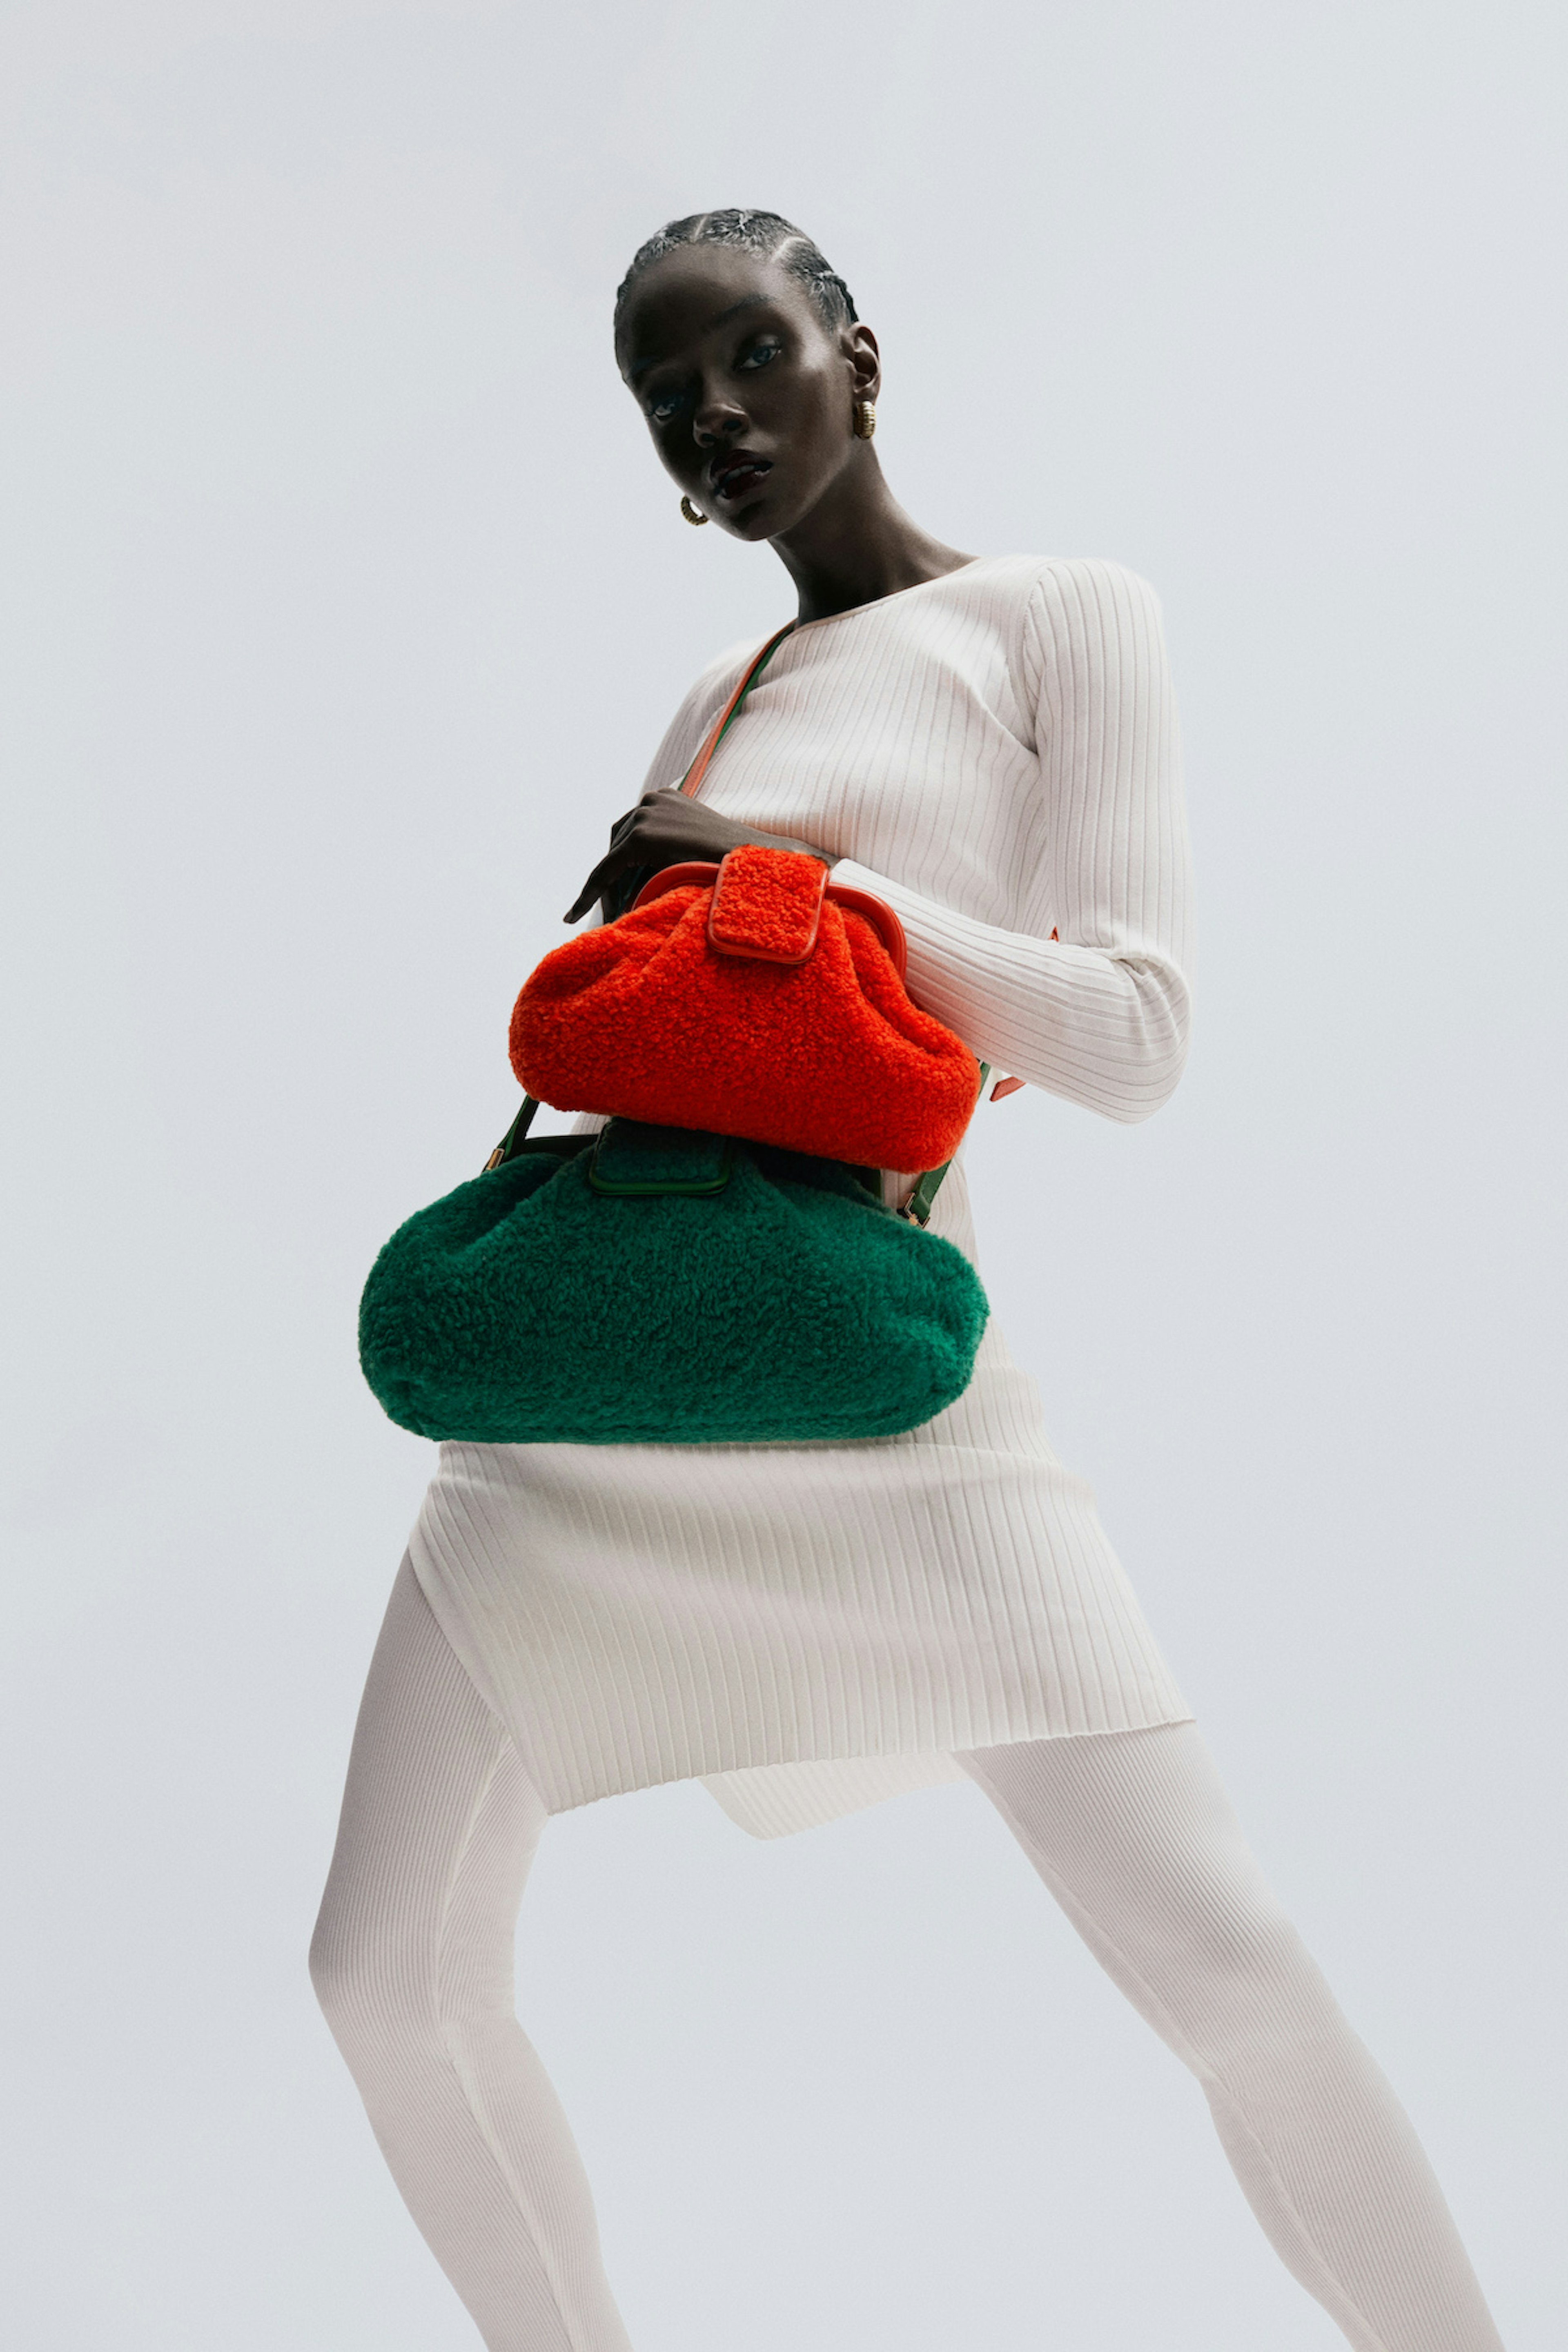 Buy Eva Mini Turuncu by Maven Bag - Clutch bags